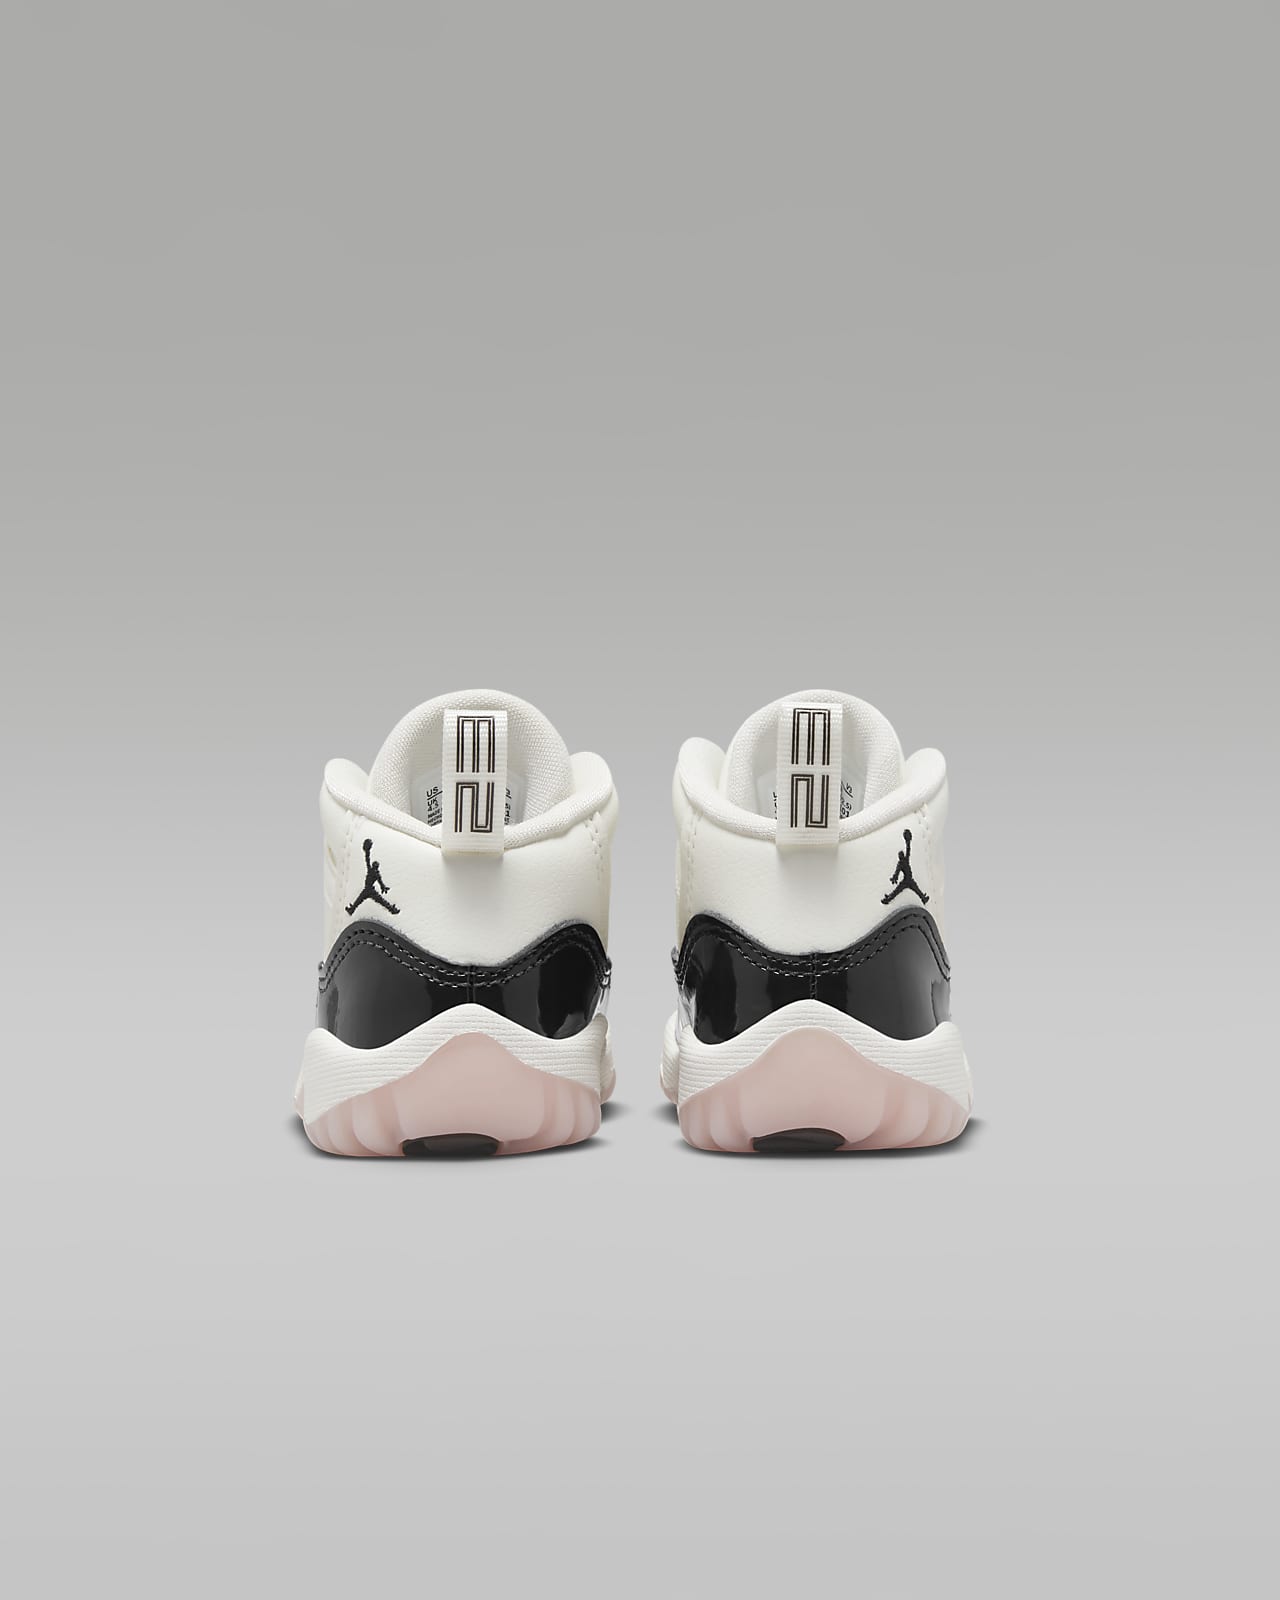 Nike Air Jordan 11 Retro Men's Basketball Shoes Size 10.5 